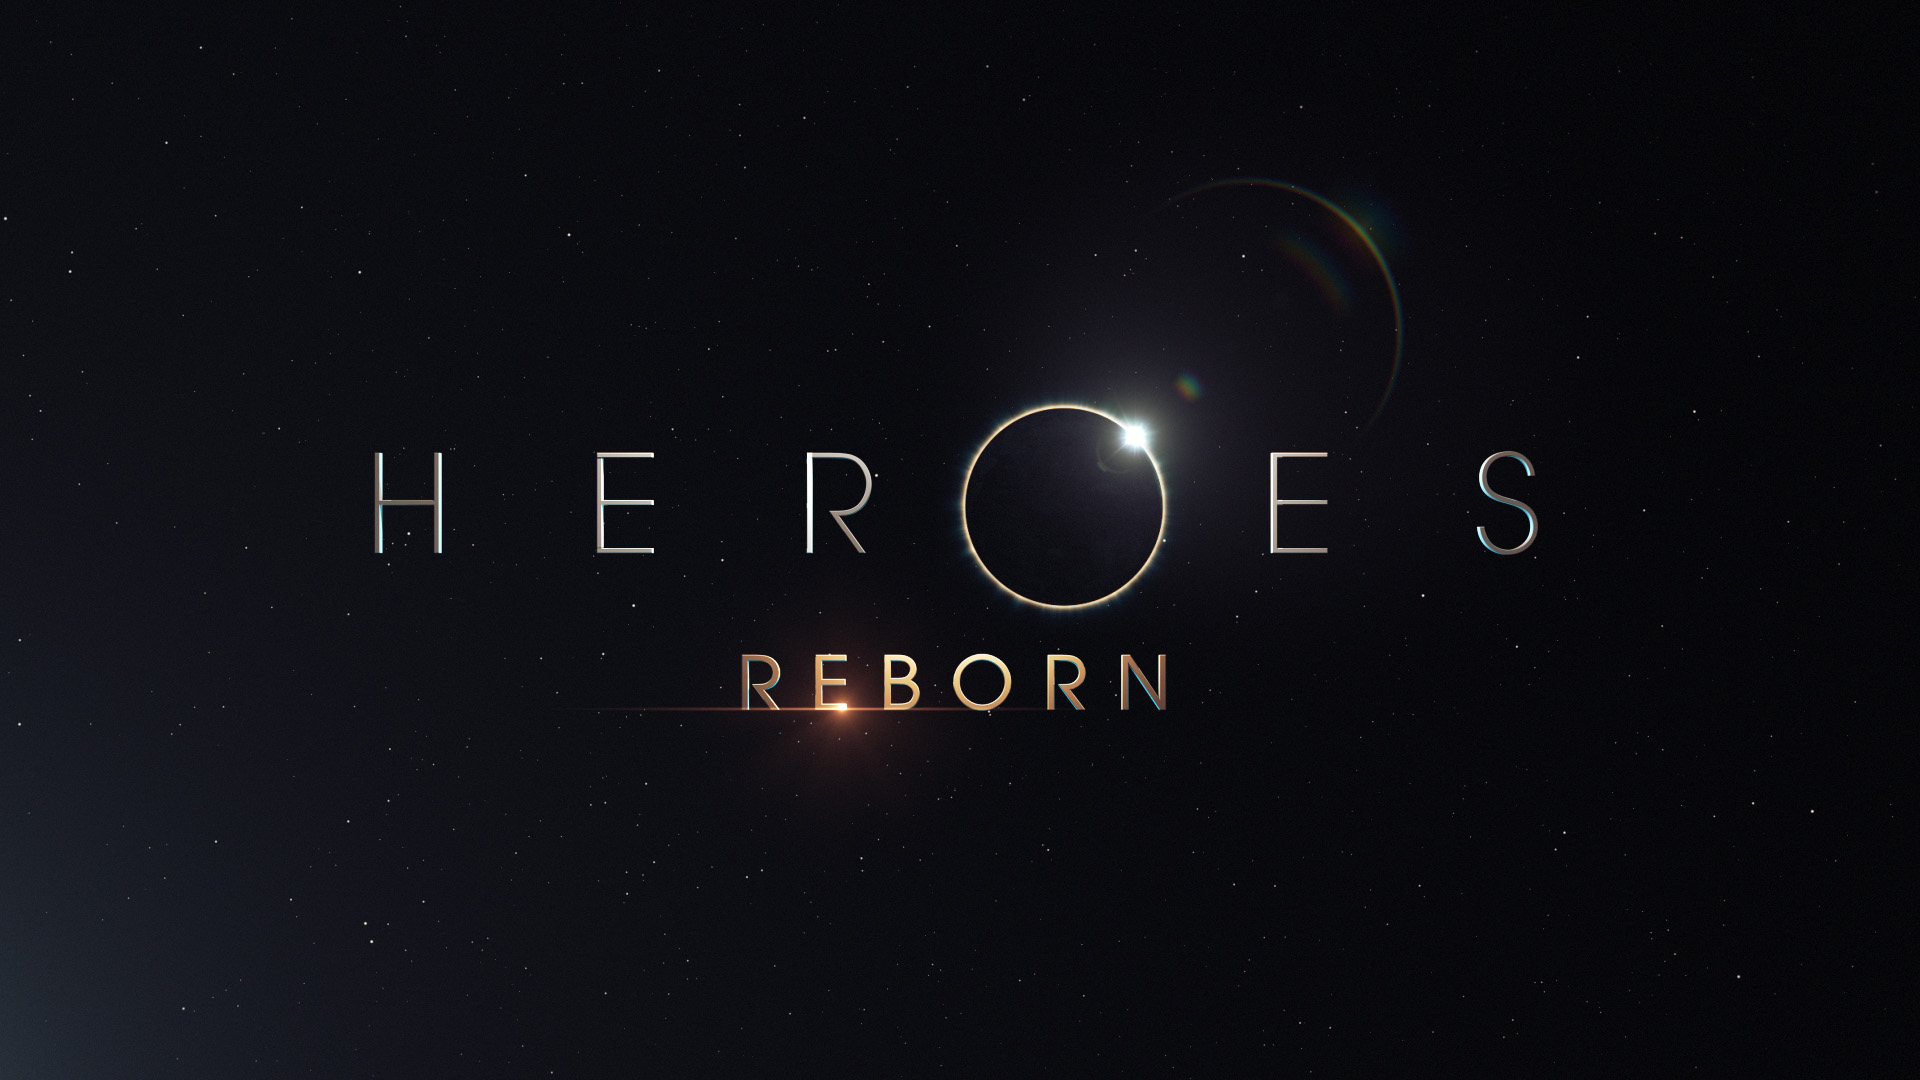 Heroes Reborn Cast